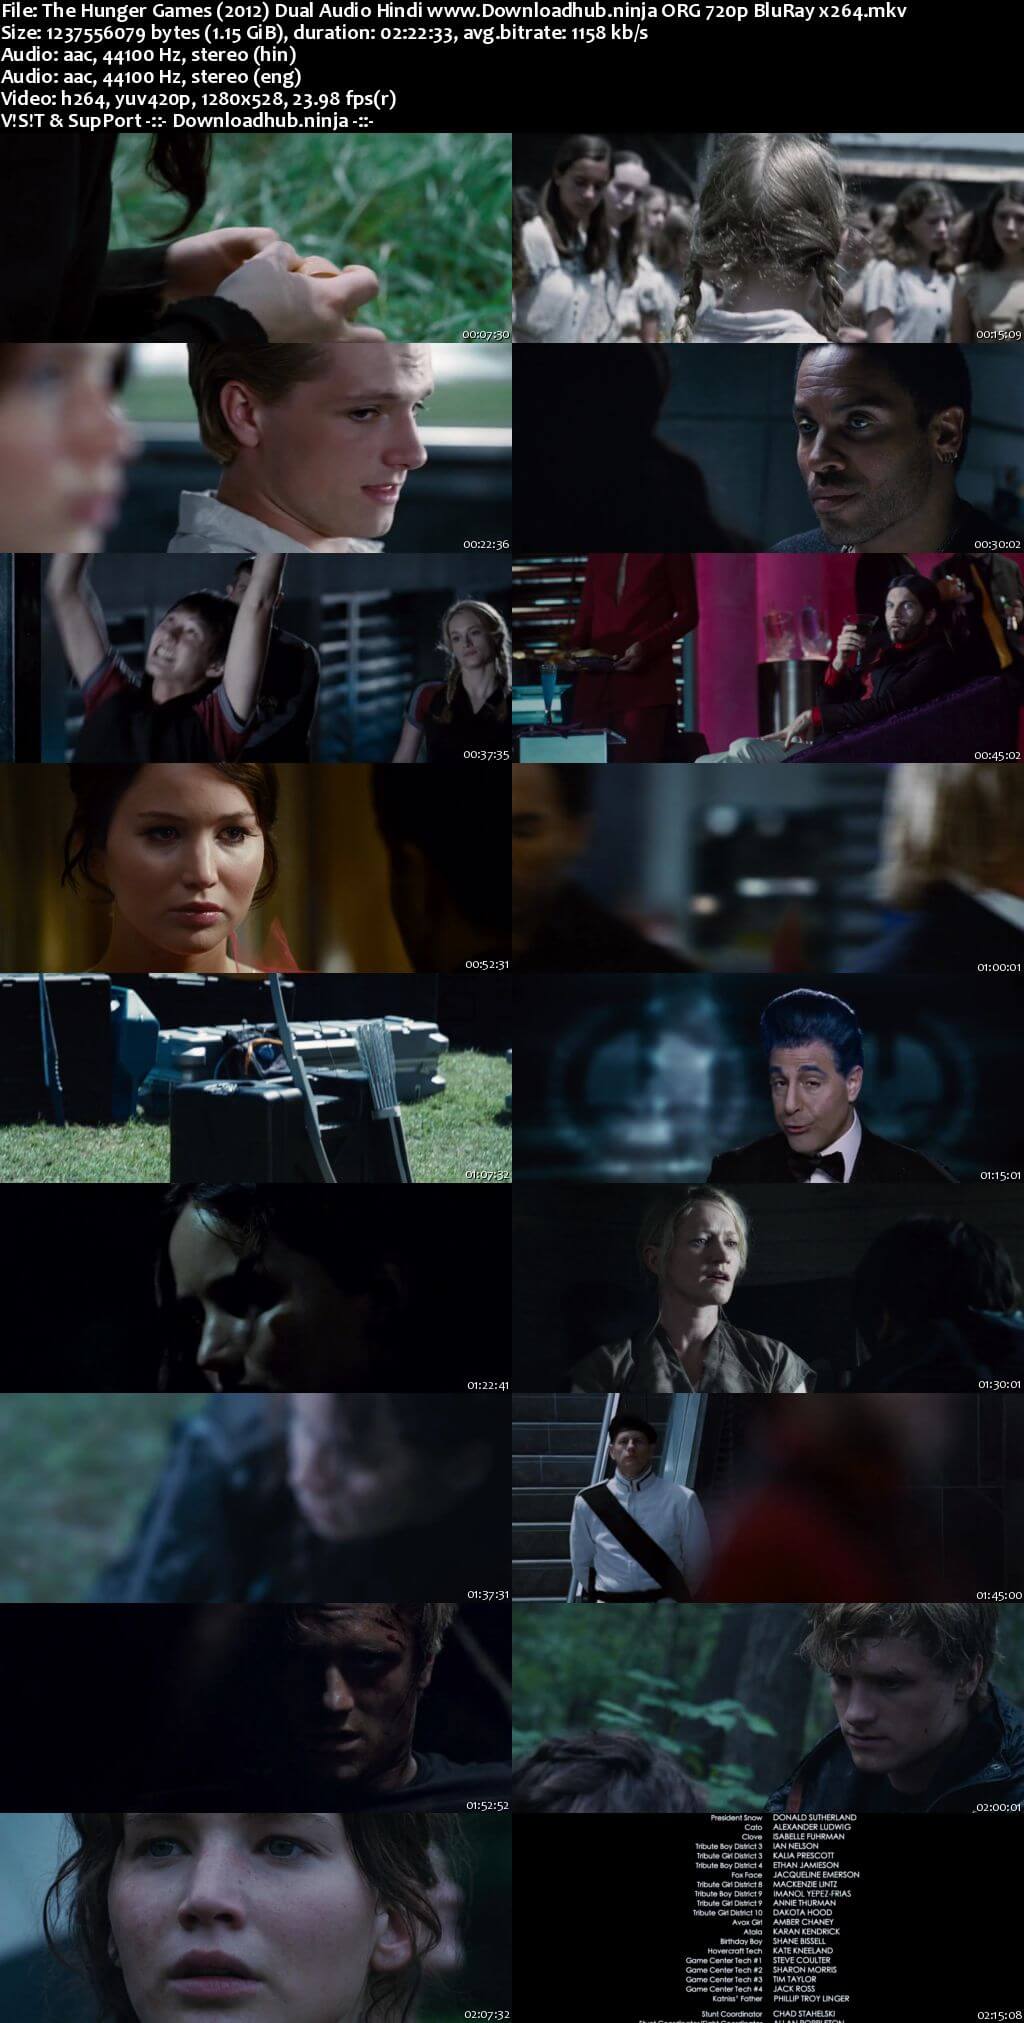 The Hunger Games 2012 Hindi Dual Audio 720p BluRay x264